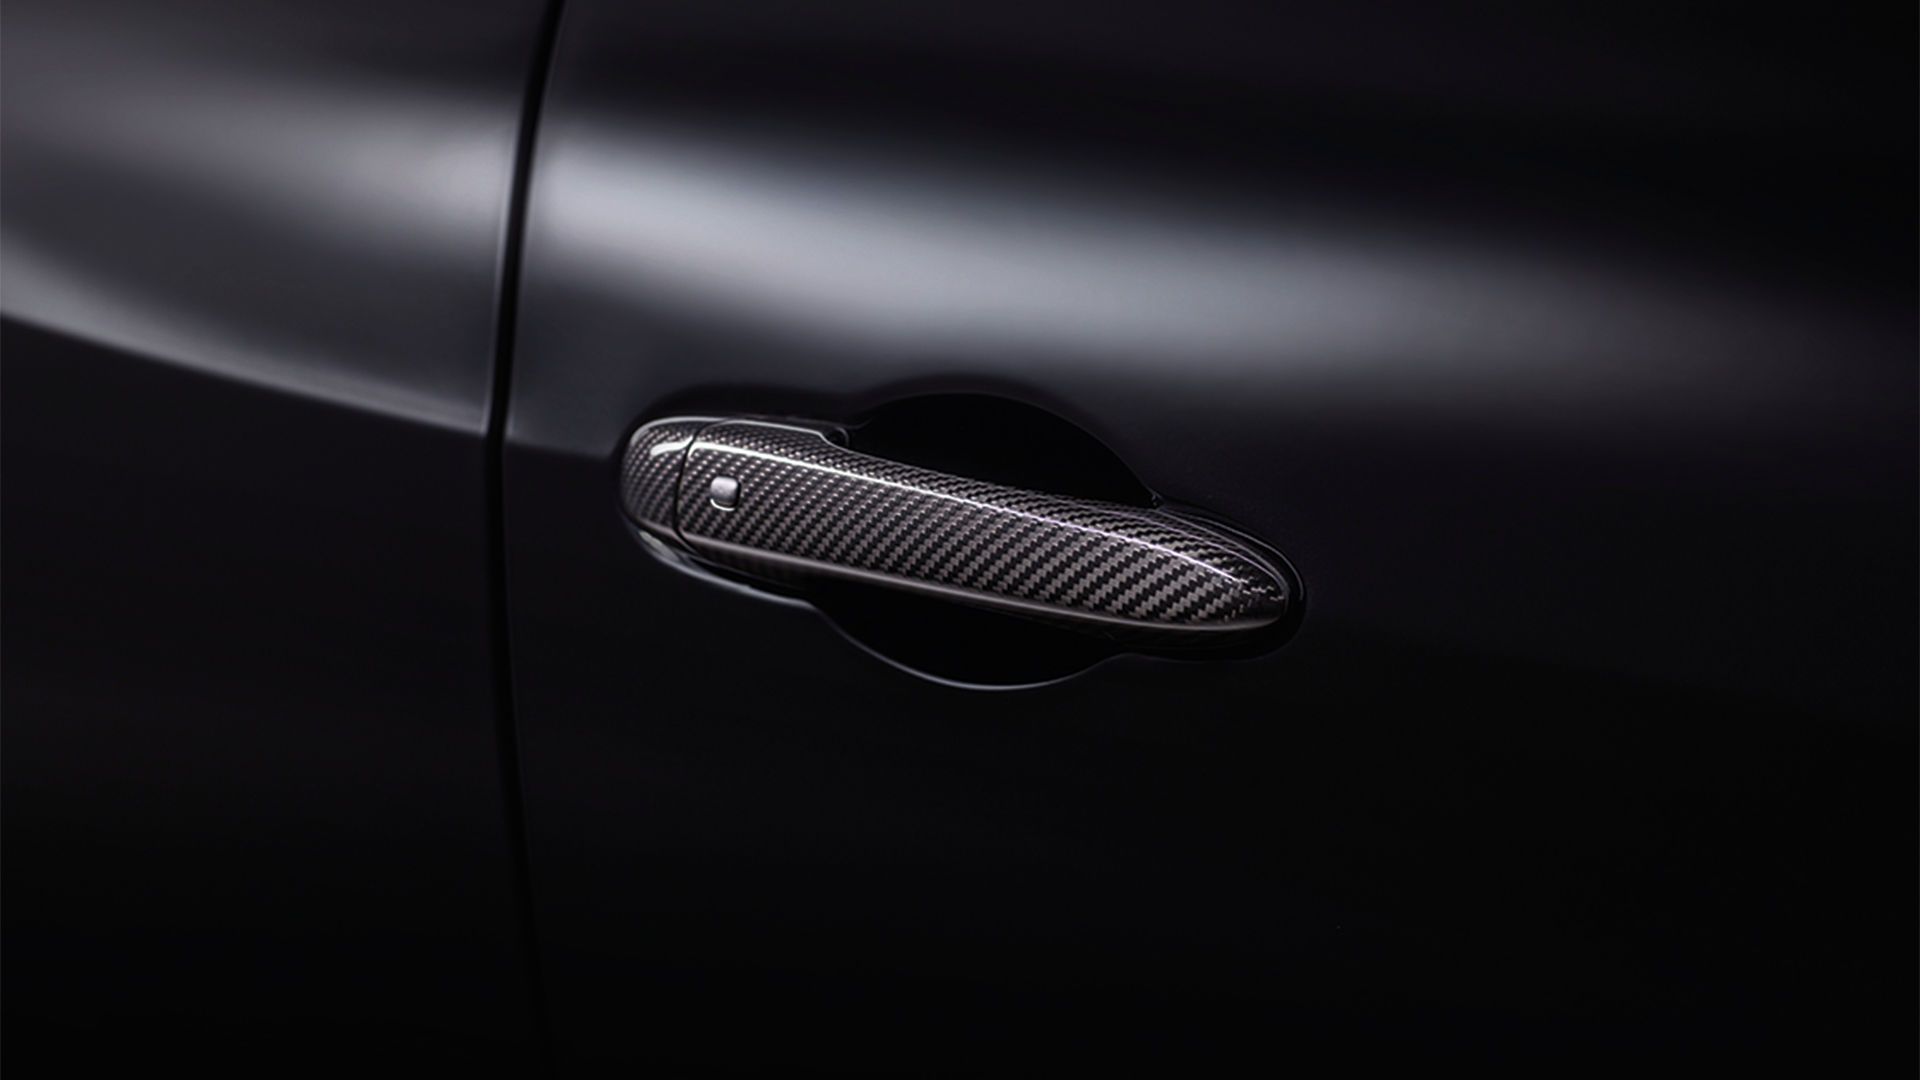 Maneta de la puerta de carbono en Maserati Quattroporte